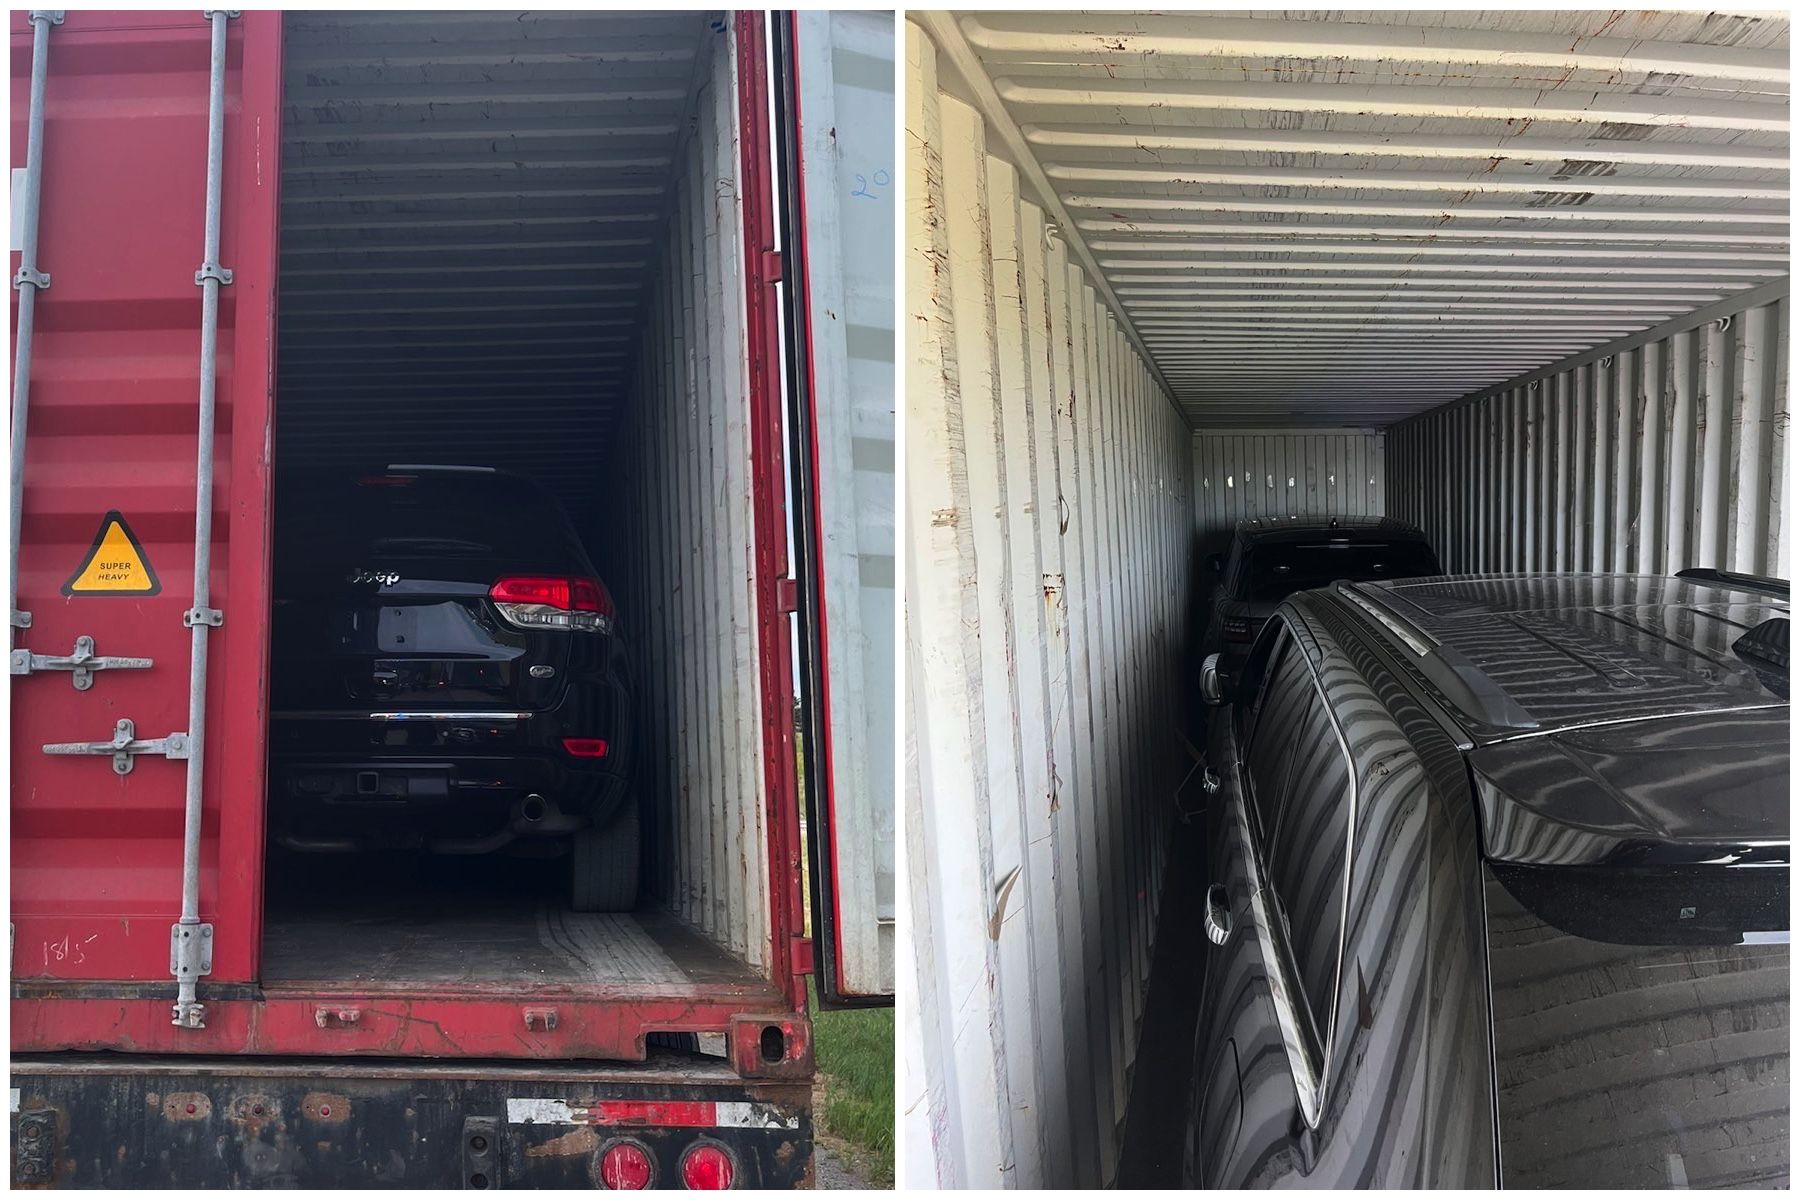 Older Vehicle Stolen in St. Cloud; Storage Containers Broken Into